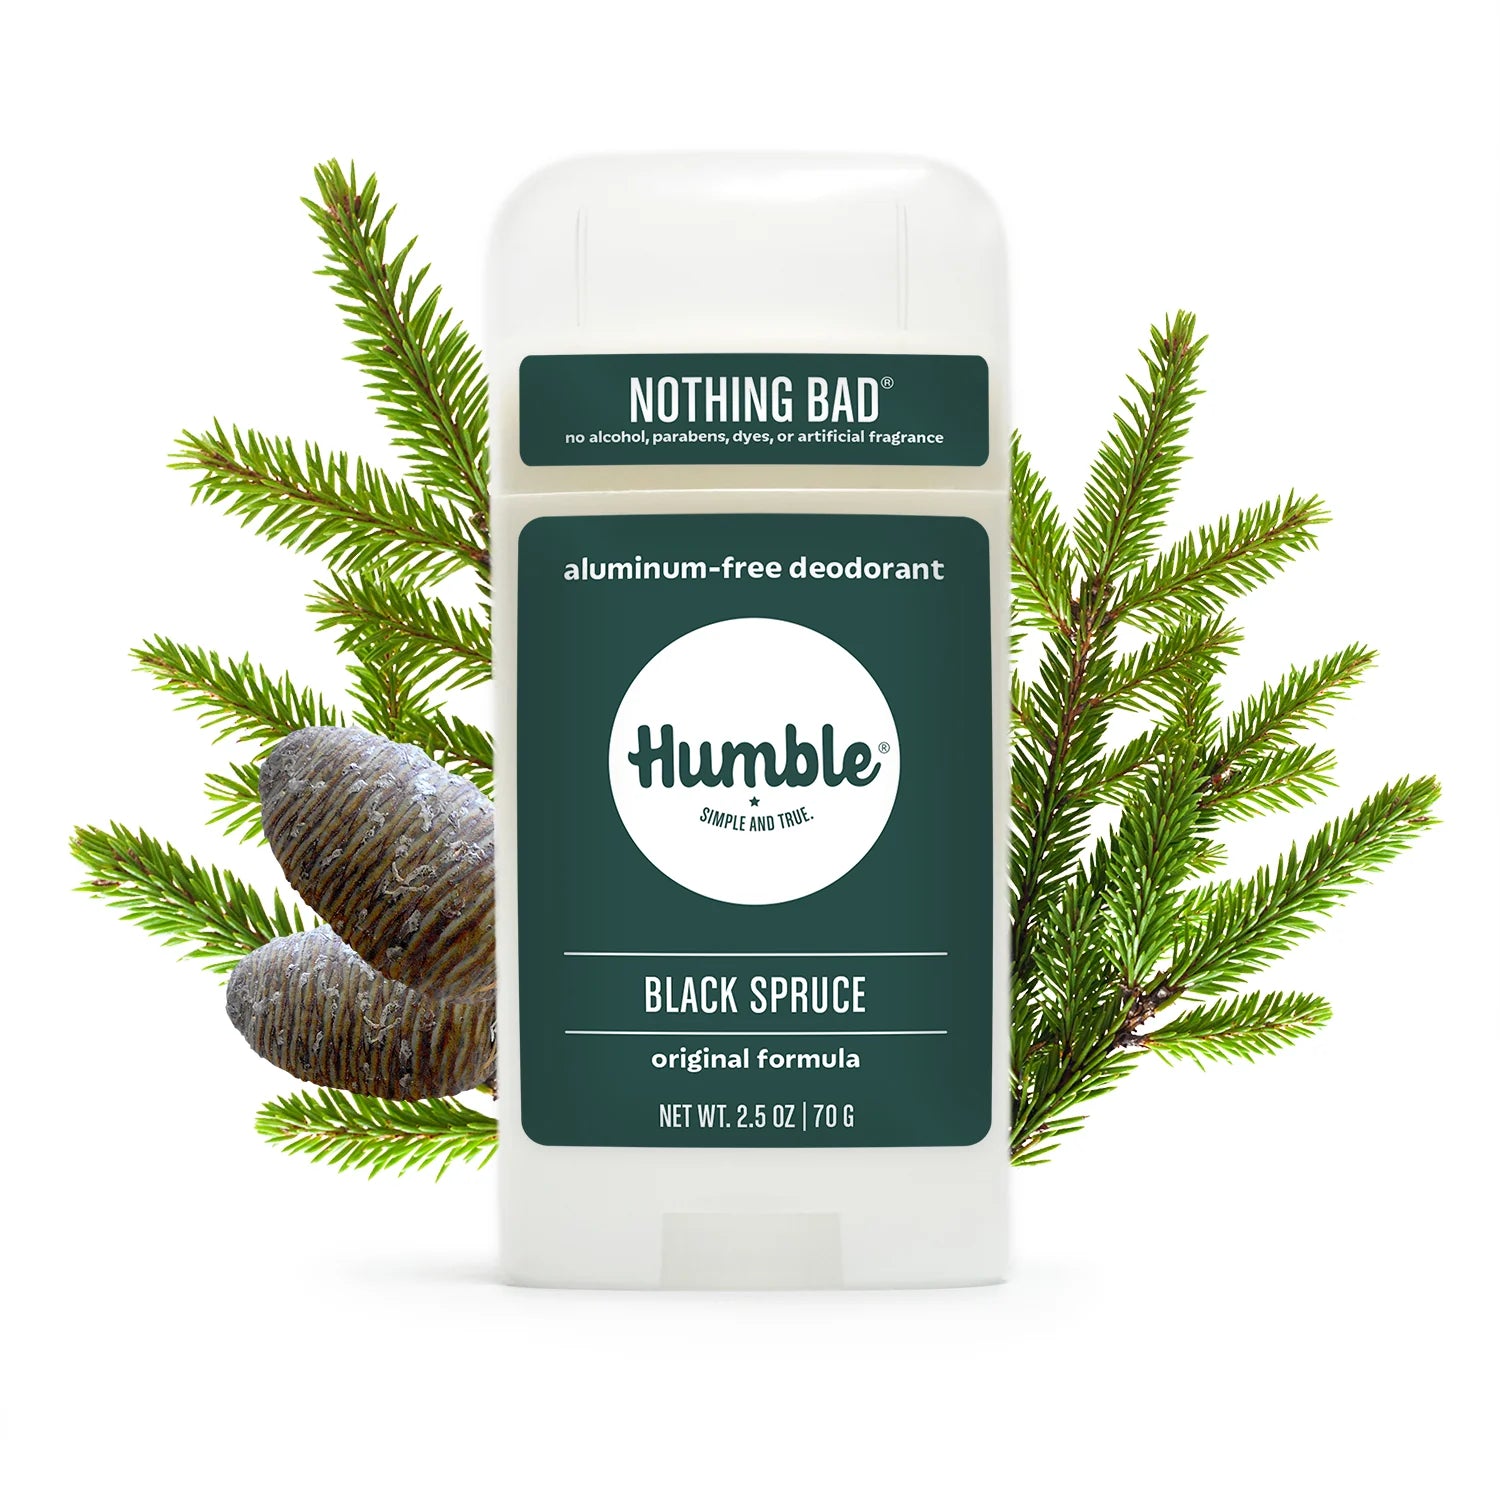 Humble Deodorant Black Spruce